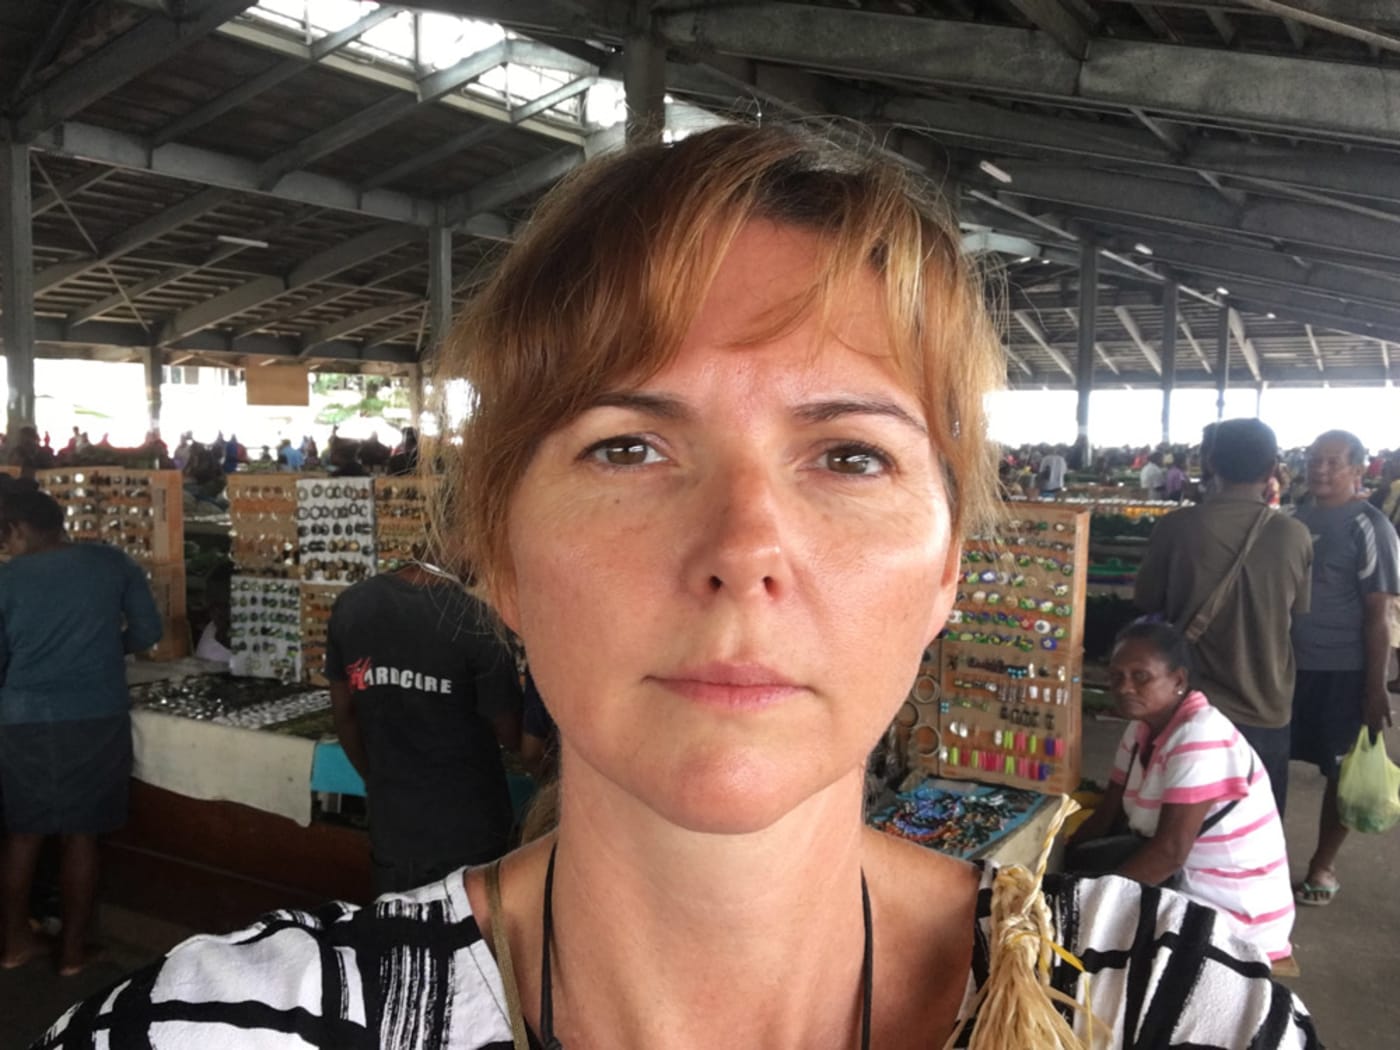 WWF-Australia’s marine scientist, Christine Hof at Honiara Central Market, March 2017